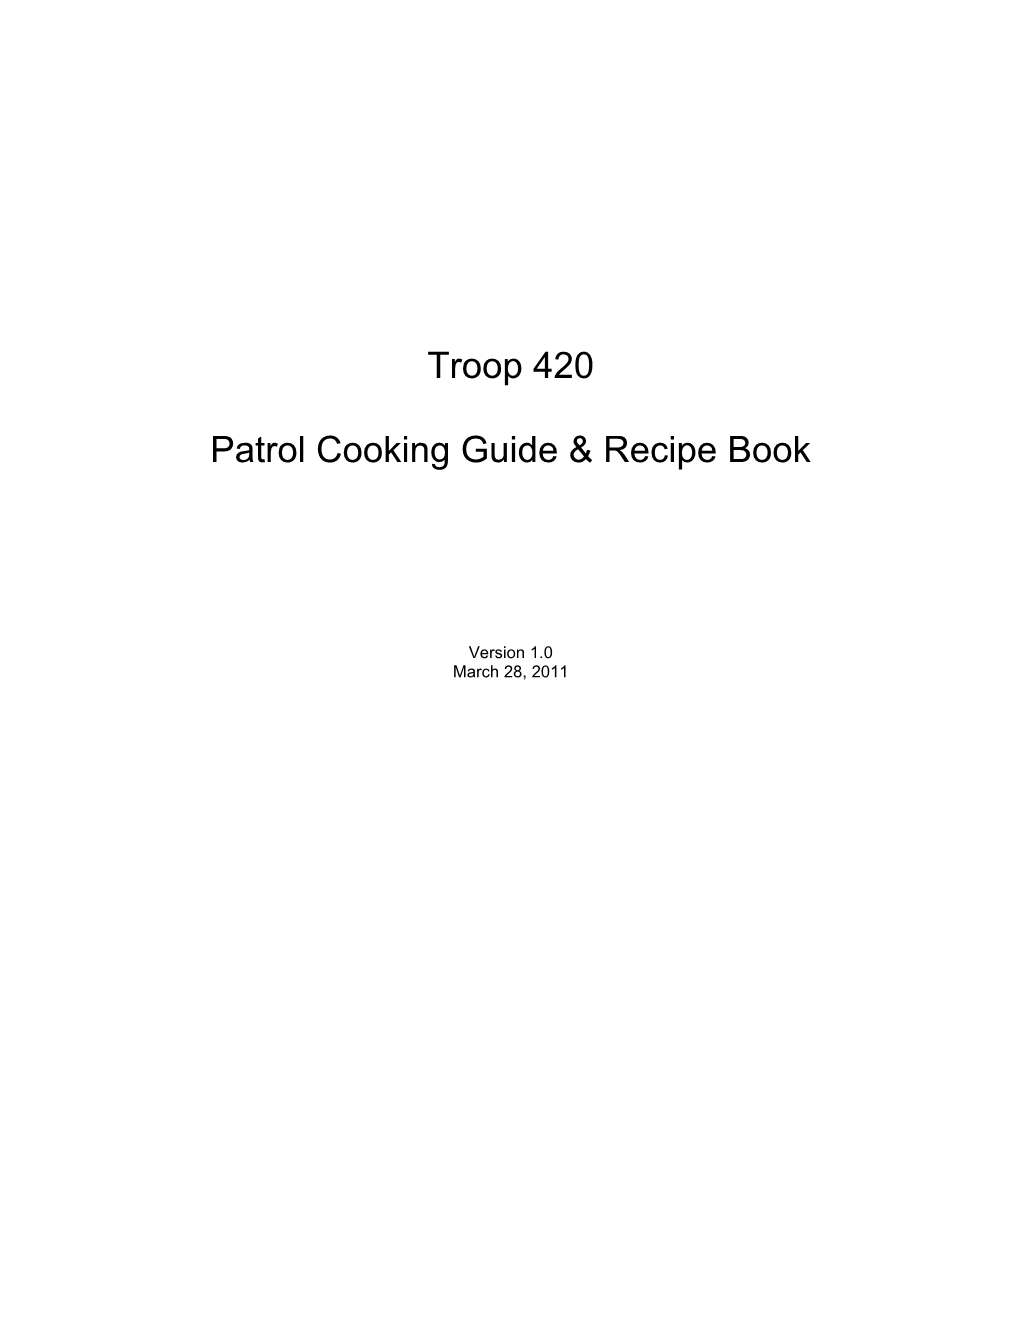 Patrol Cooking Guide & Recipe Book